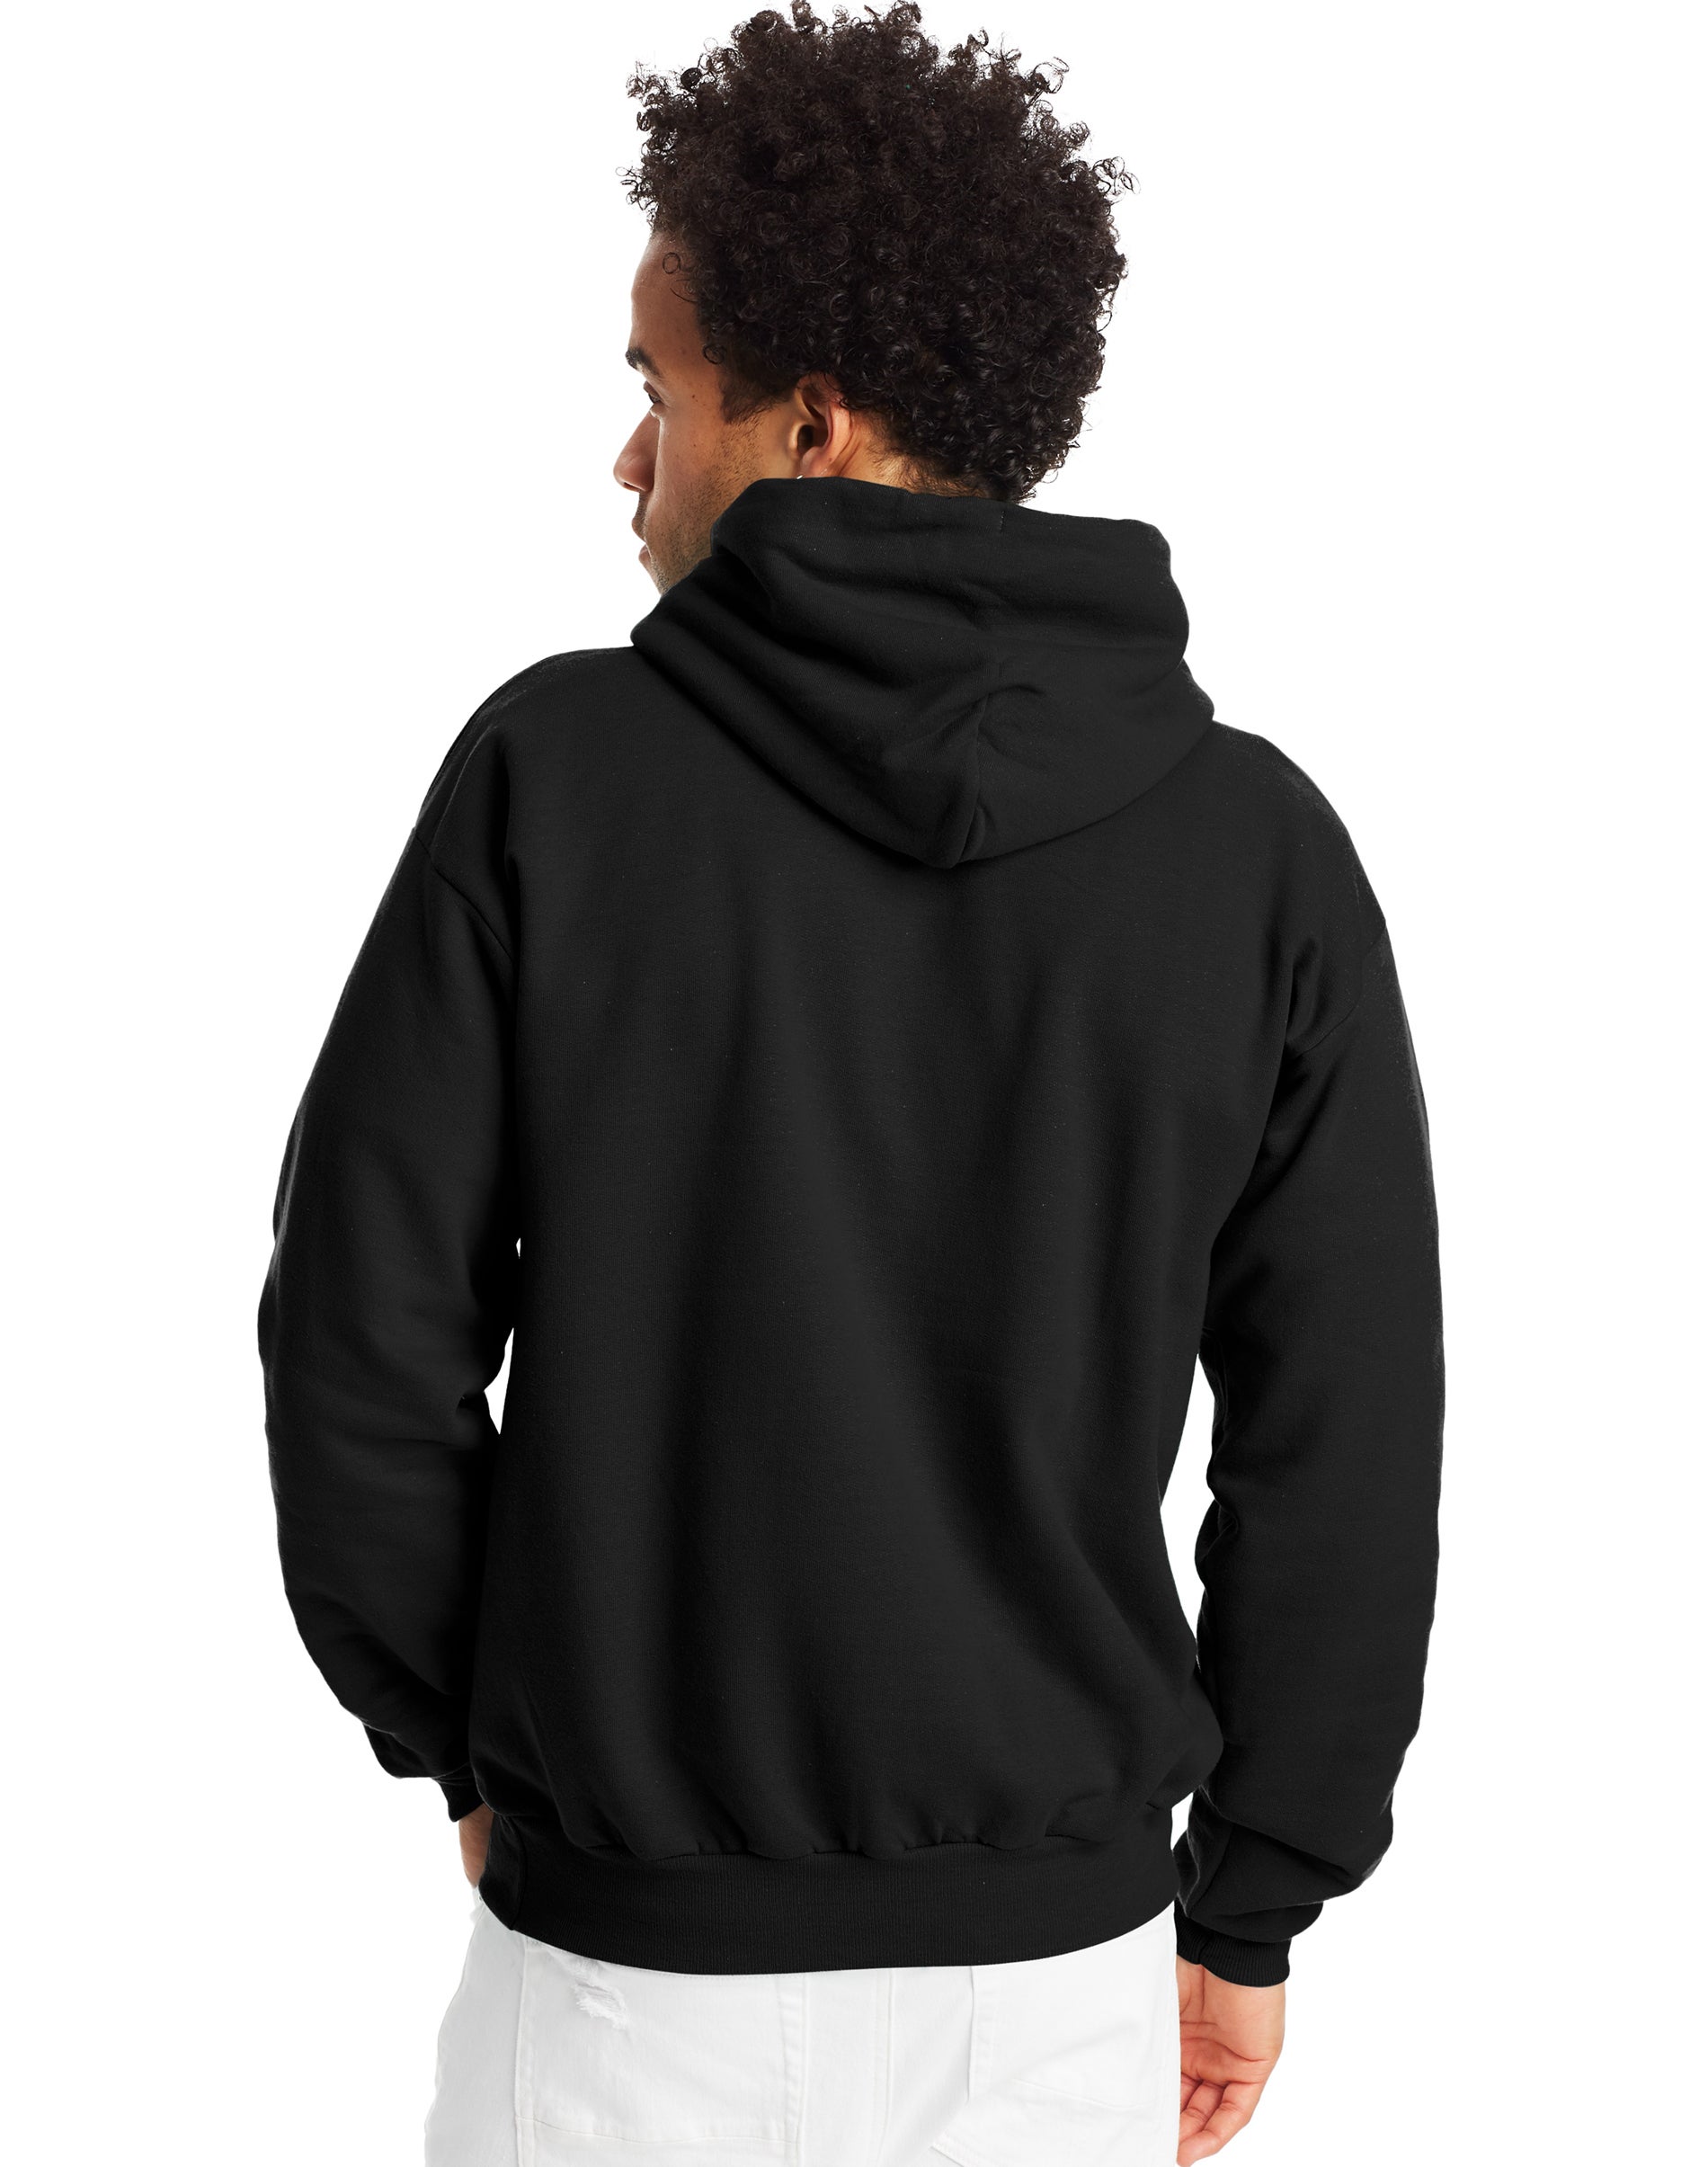 Hanes EcoSmart Unisex Fleece Hoodie (Big & Tall Sizes Available) Black 2XL - image 4 of 5